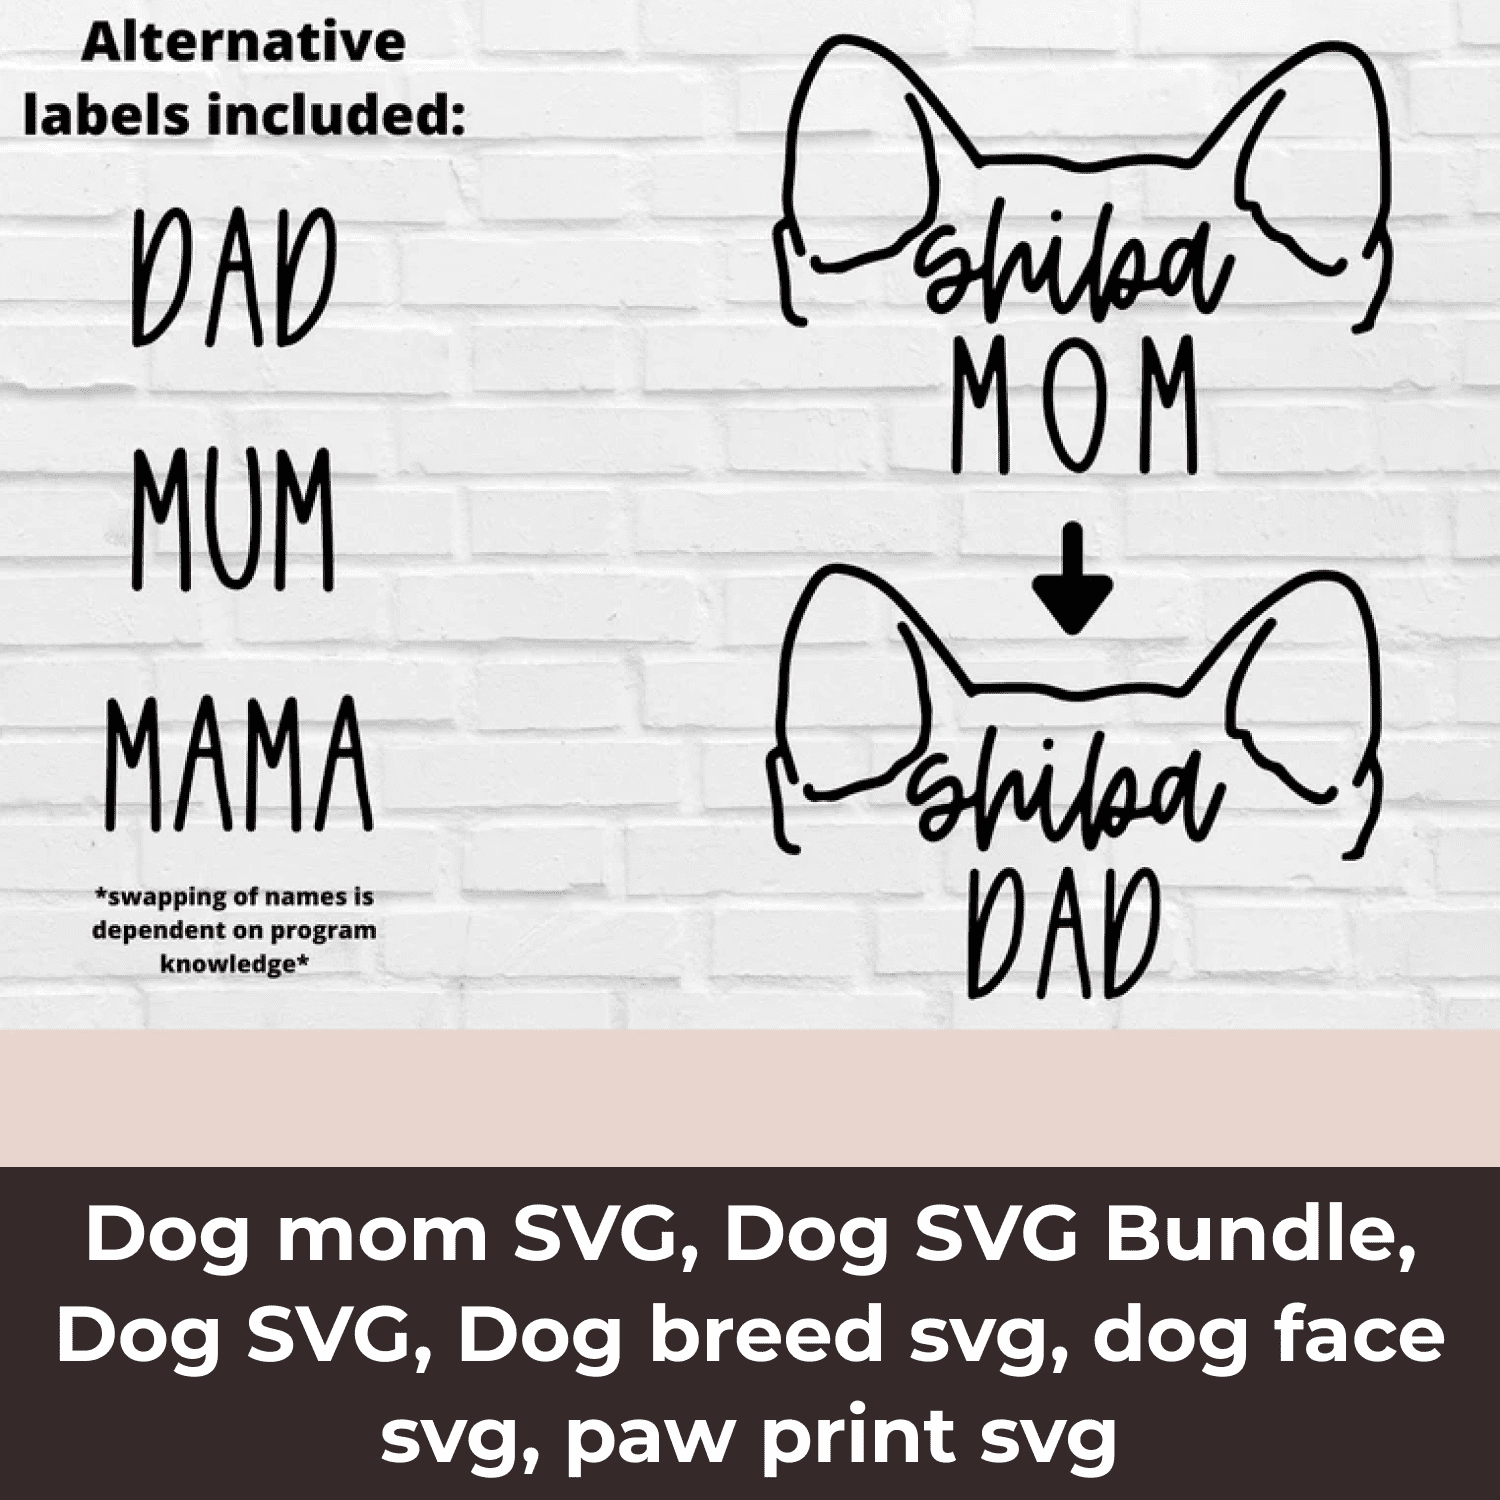 Dog mom SVG cover image.